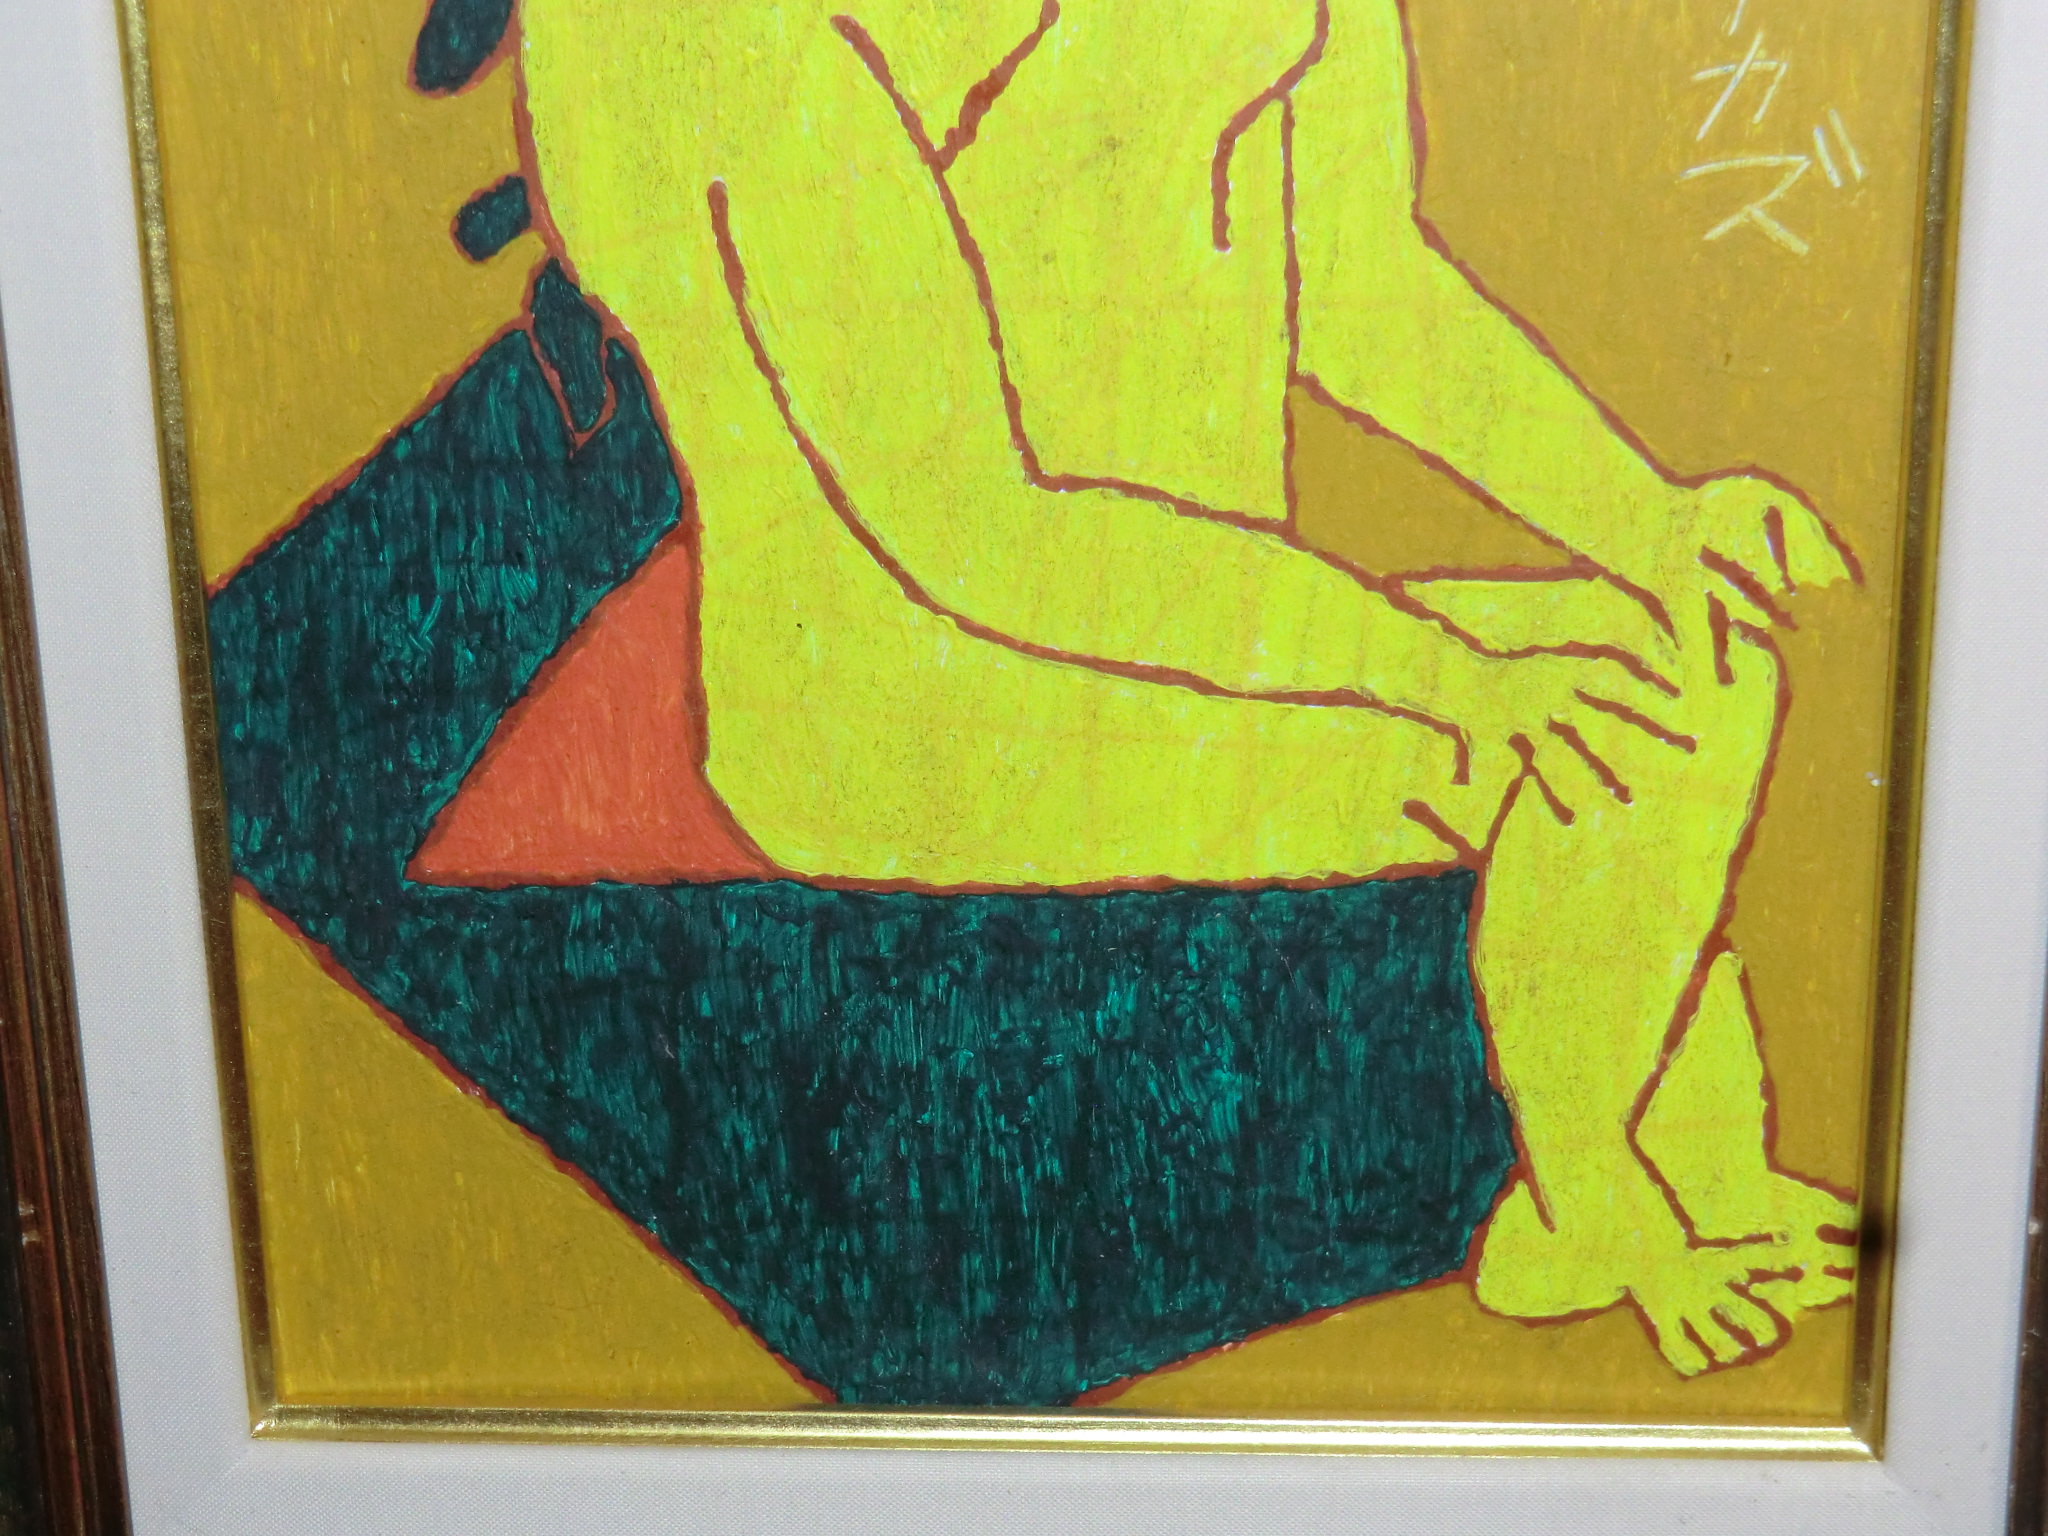 熊谷守一 裸婦 油彩画   八事商事   絵画レンタル   愛知県を中心